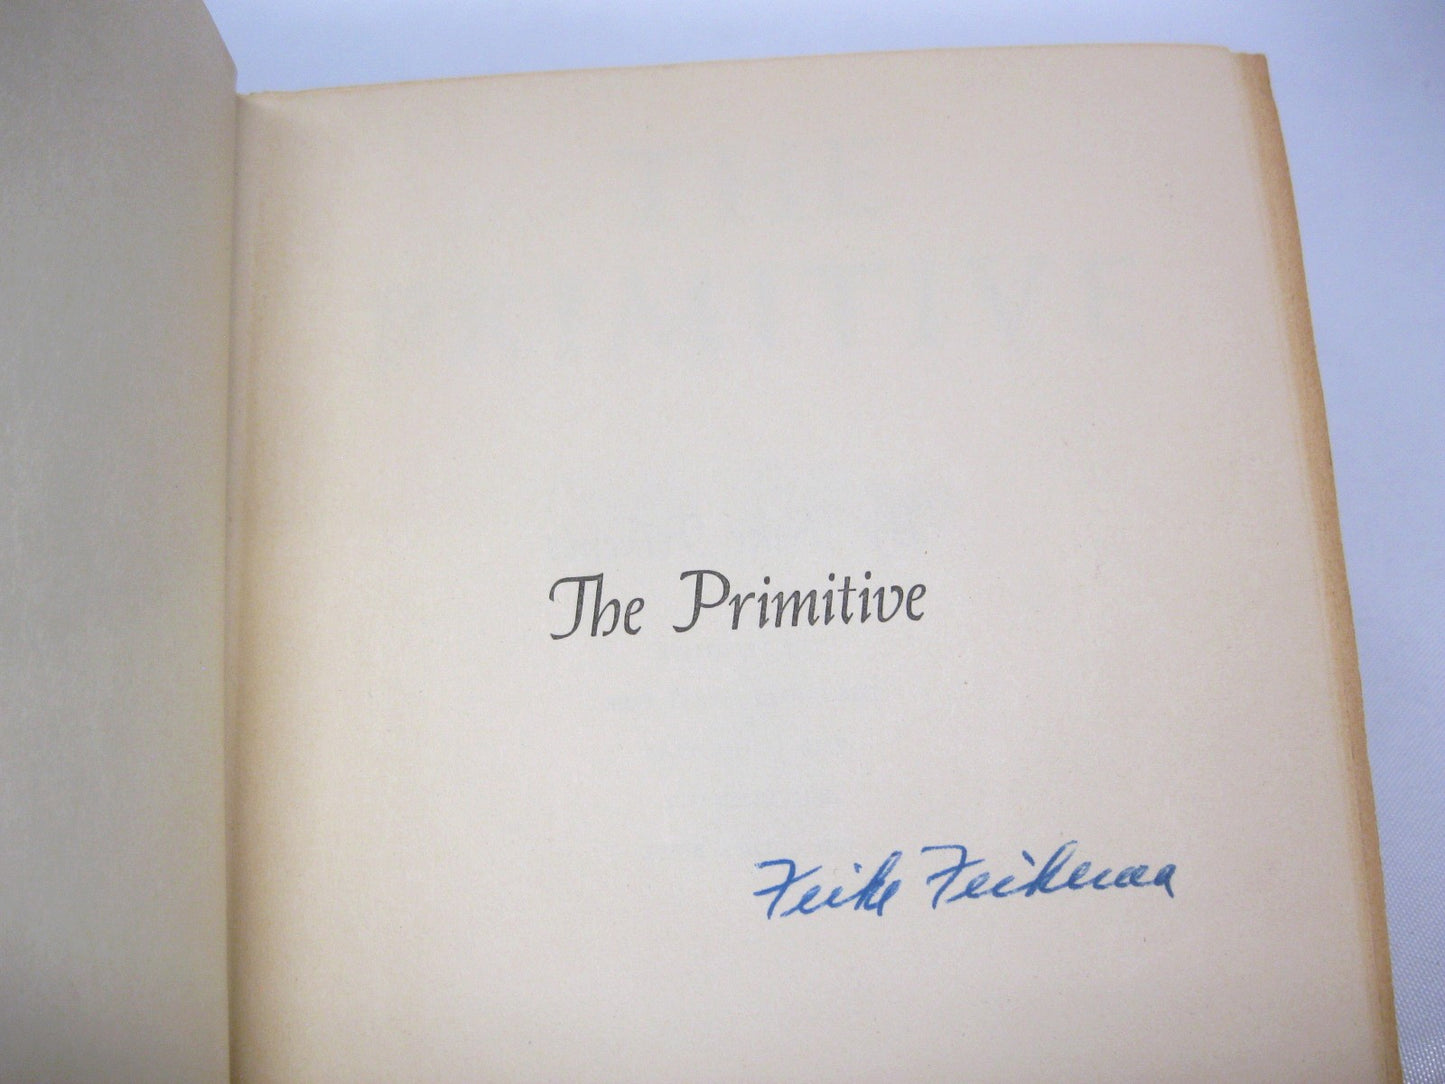 The Primitive by Feike Feikema